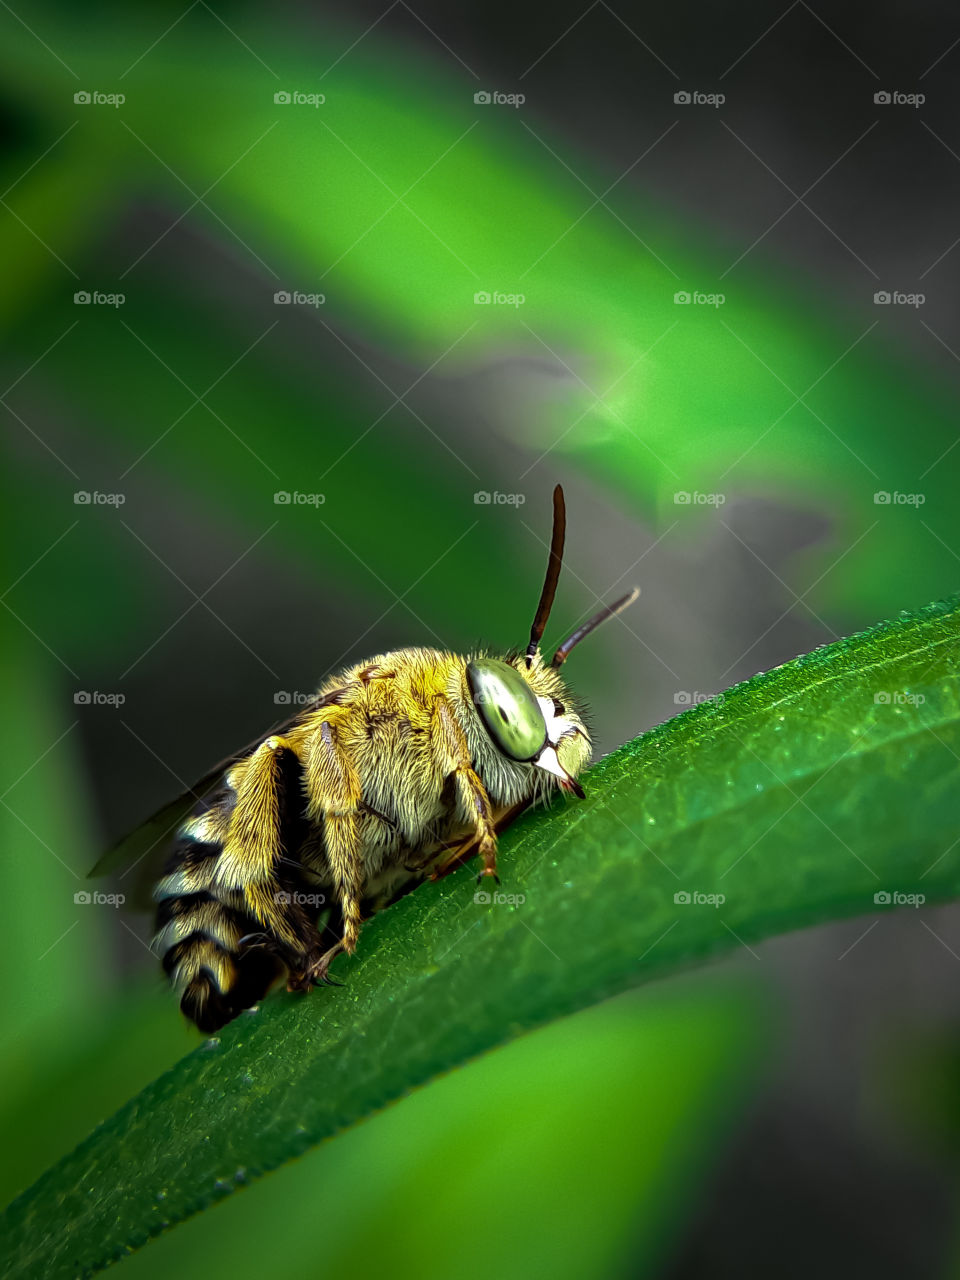 Bee on the leaf